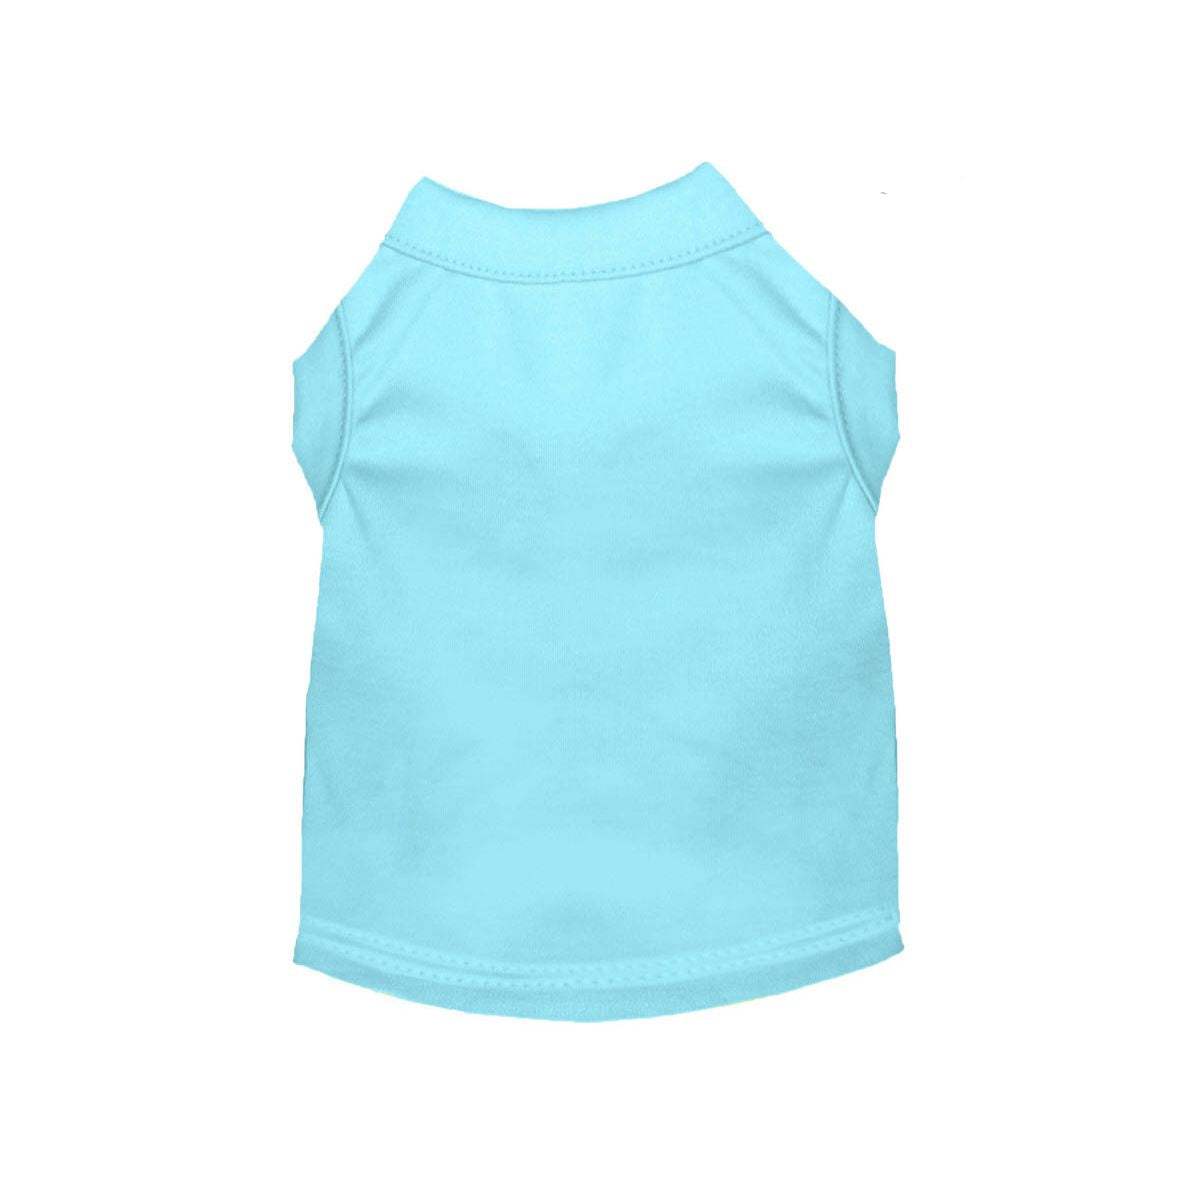 Cotton Blend Tee Shirt in Aqua | Pawlicious & Company